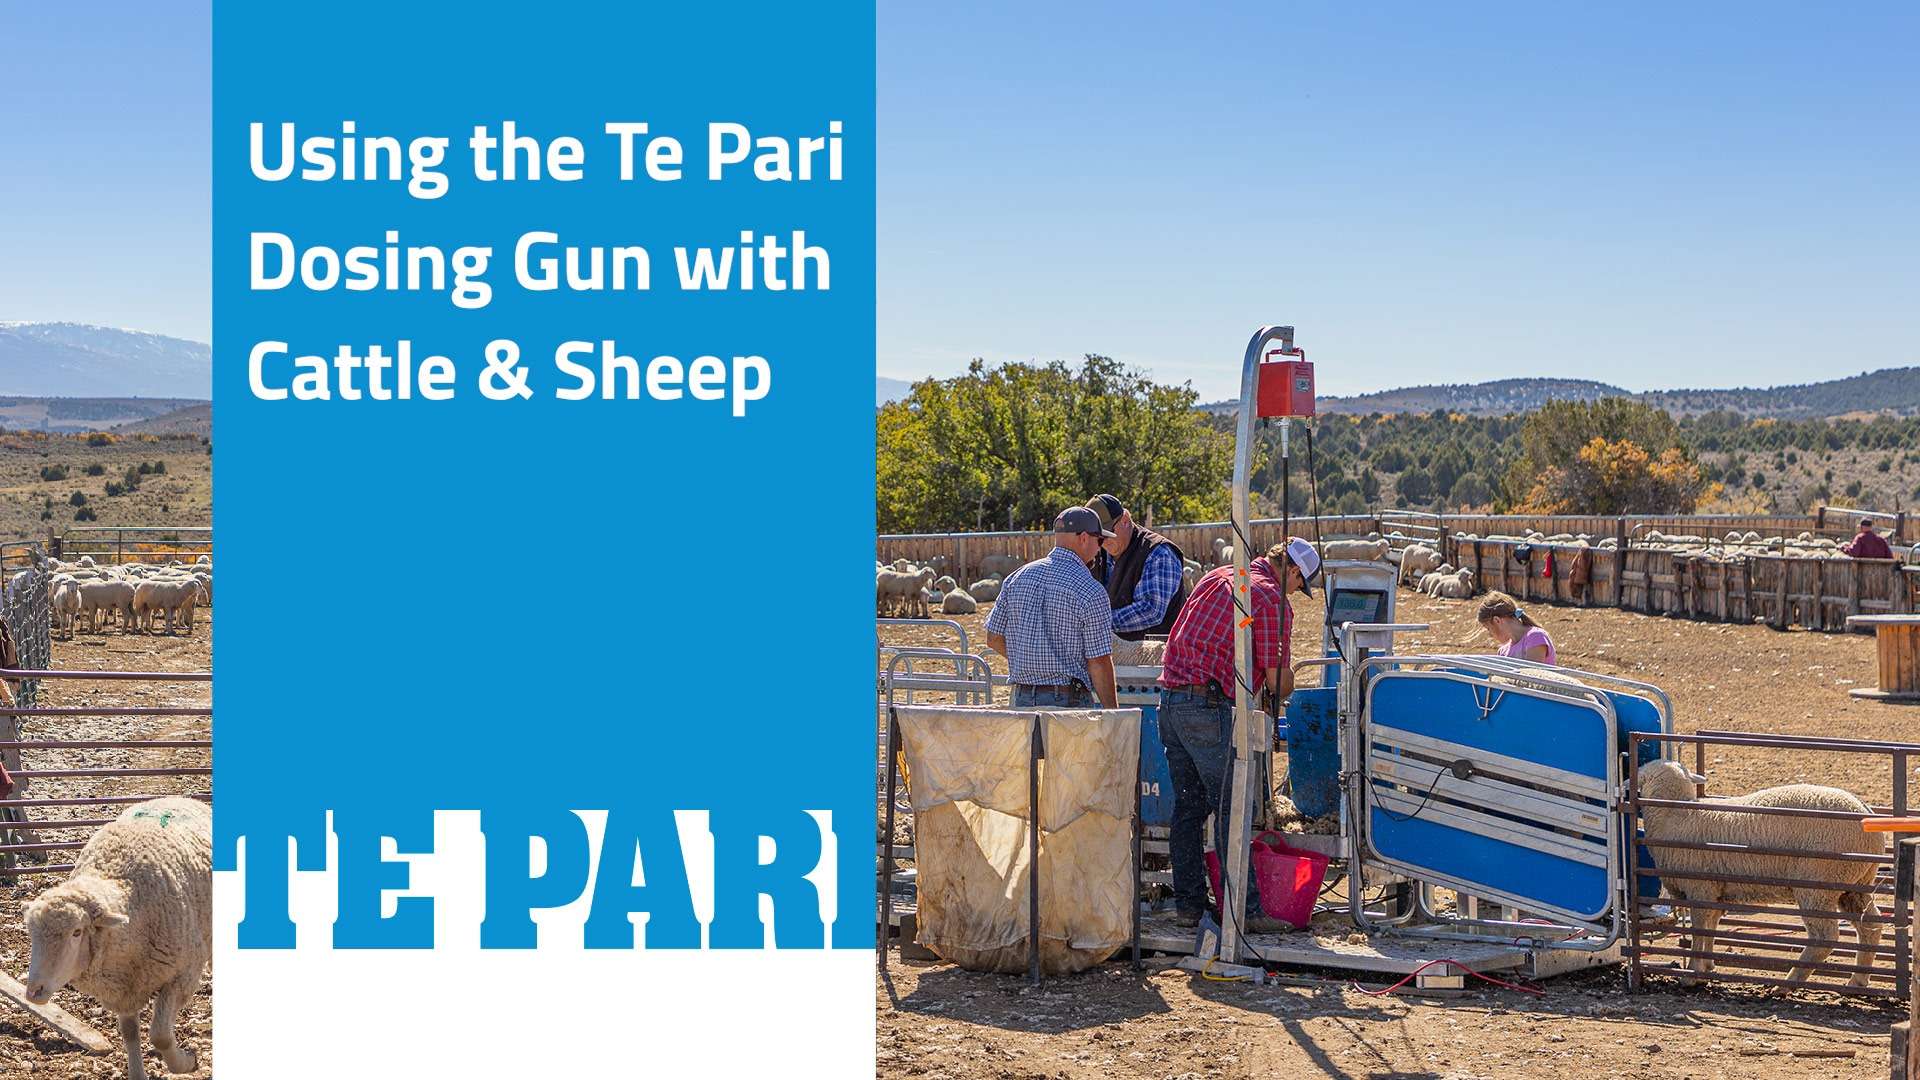 Using the Te Pari Dosing Gun for Cattle & Sheep